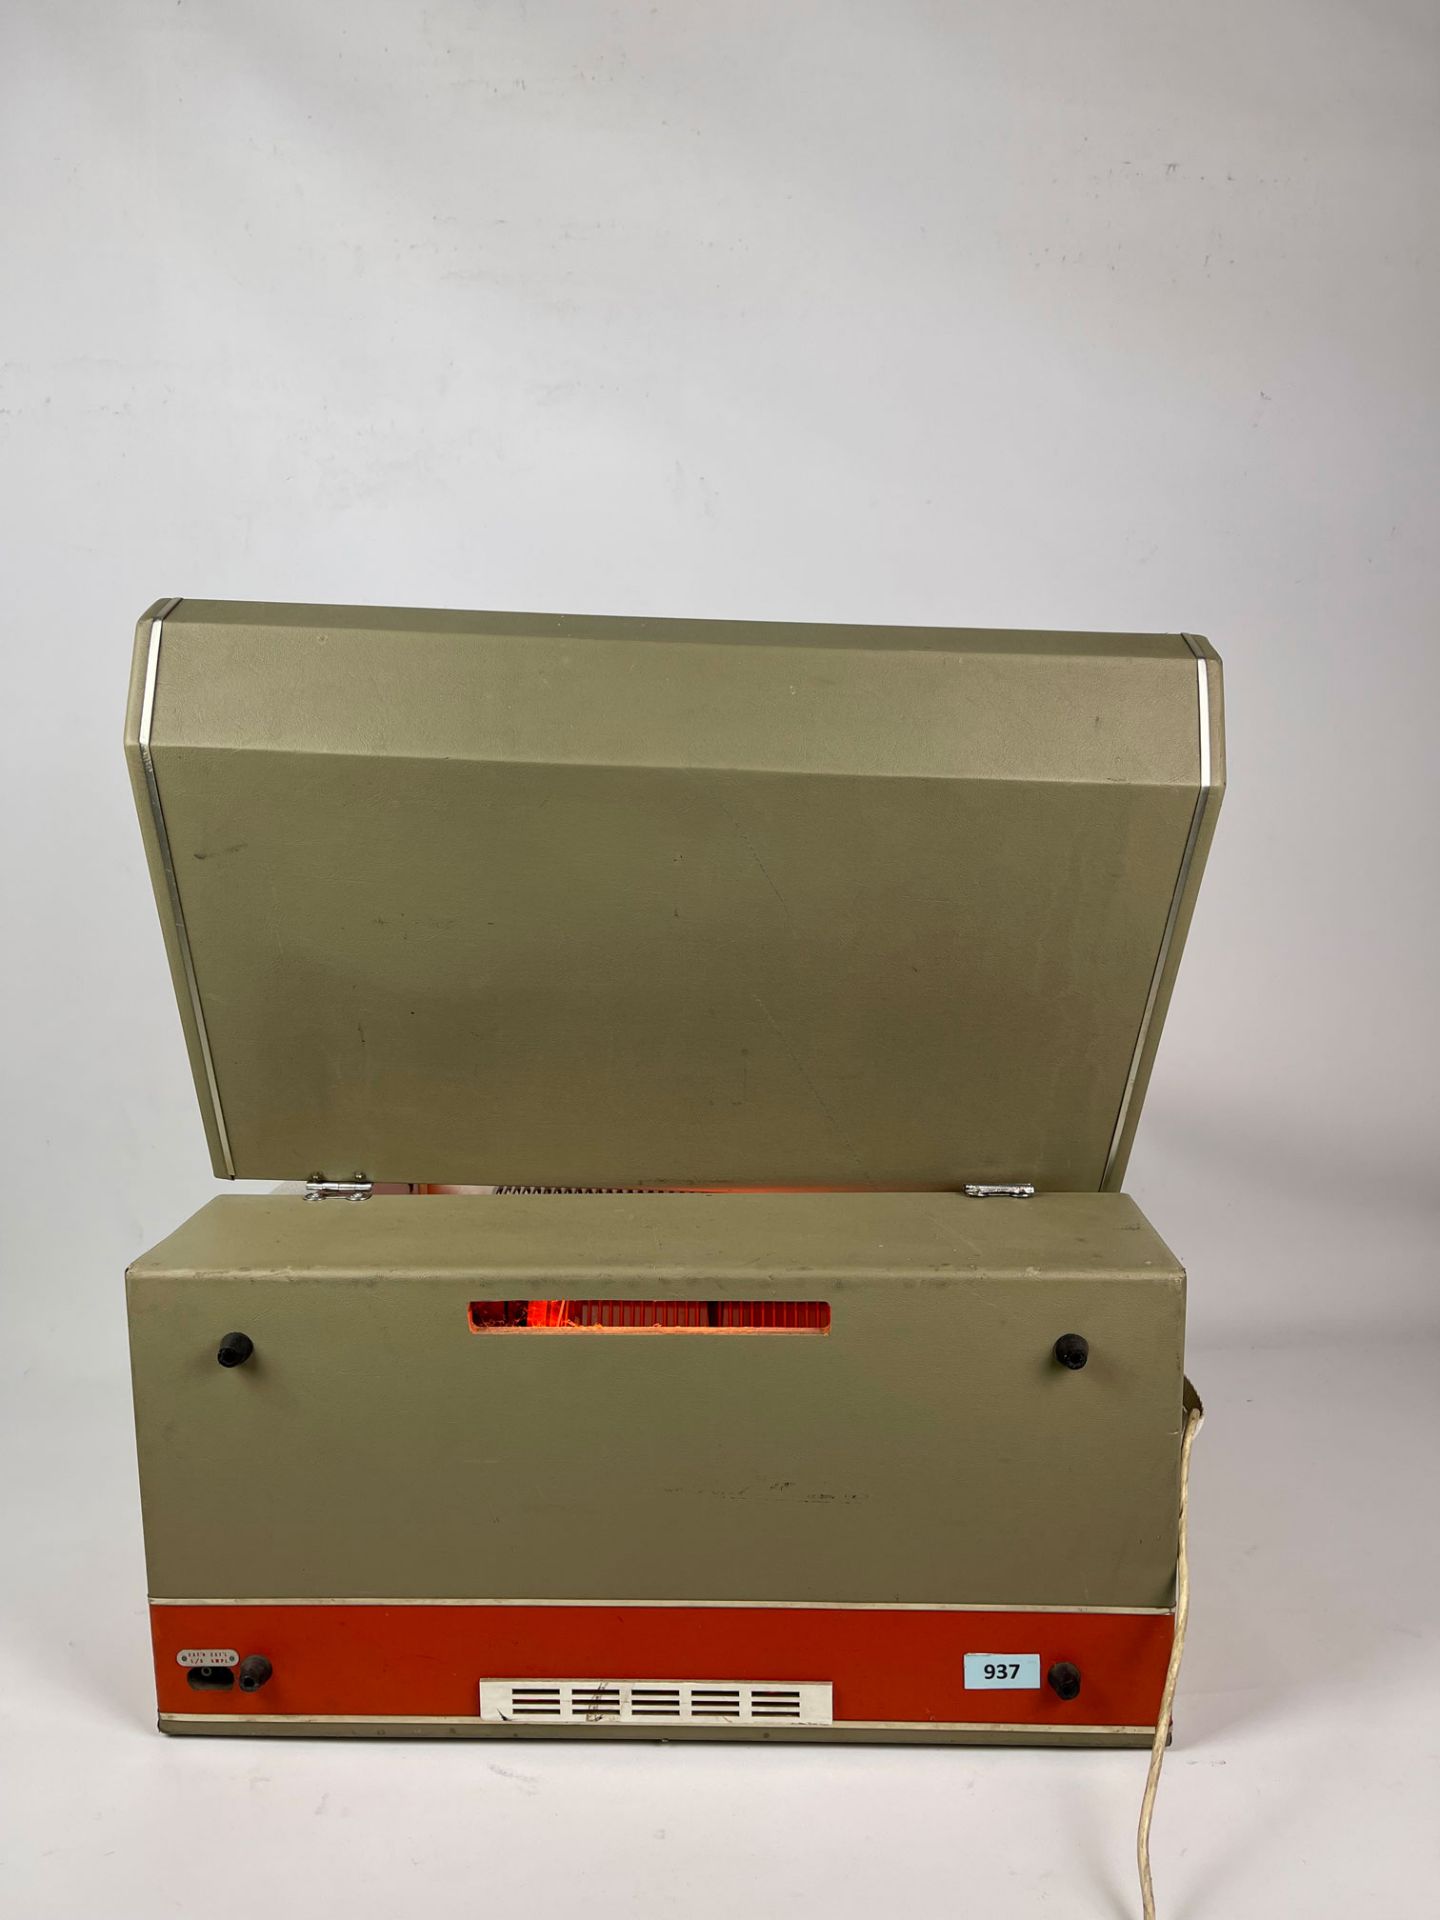 1965 Kolster-Brandes KB Discomatic Portable Jukebox - Image 6 of 11